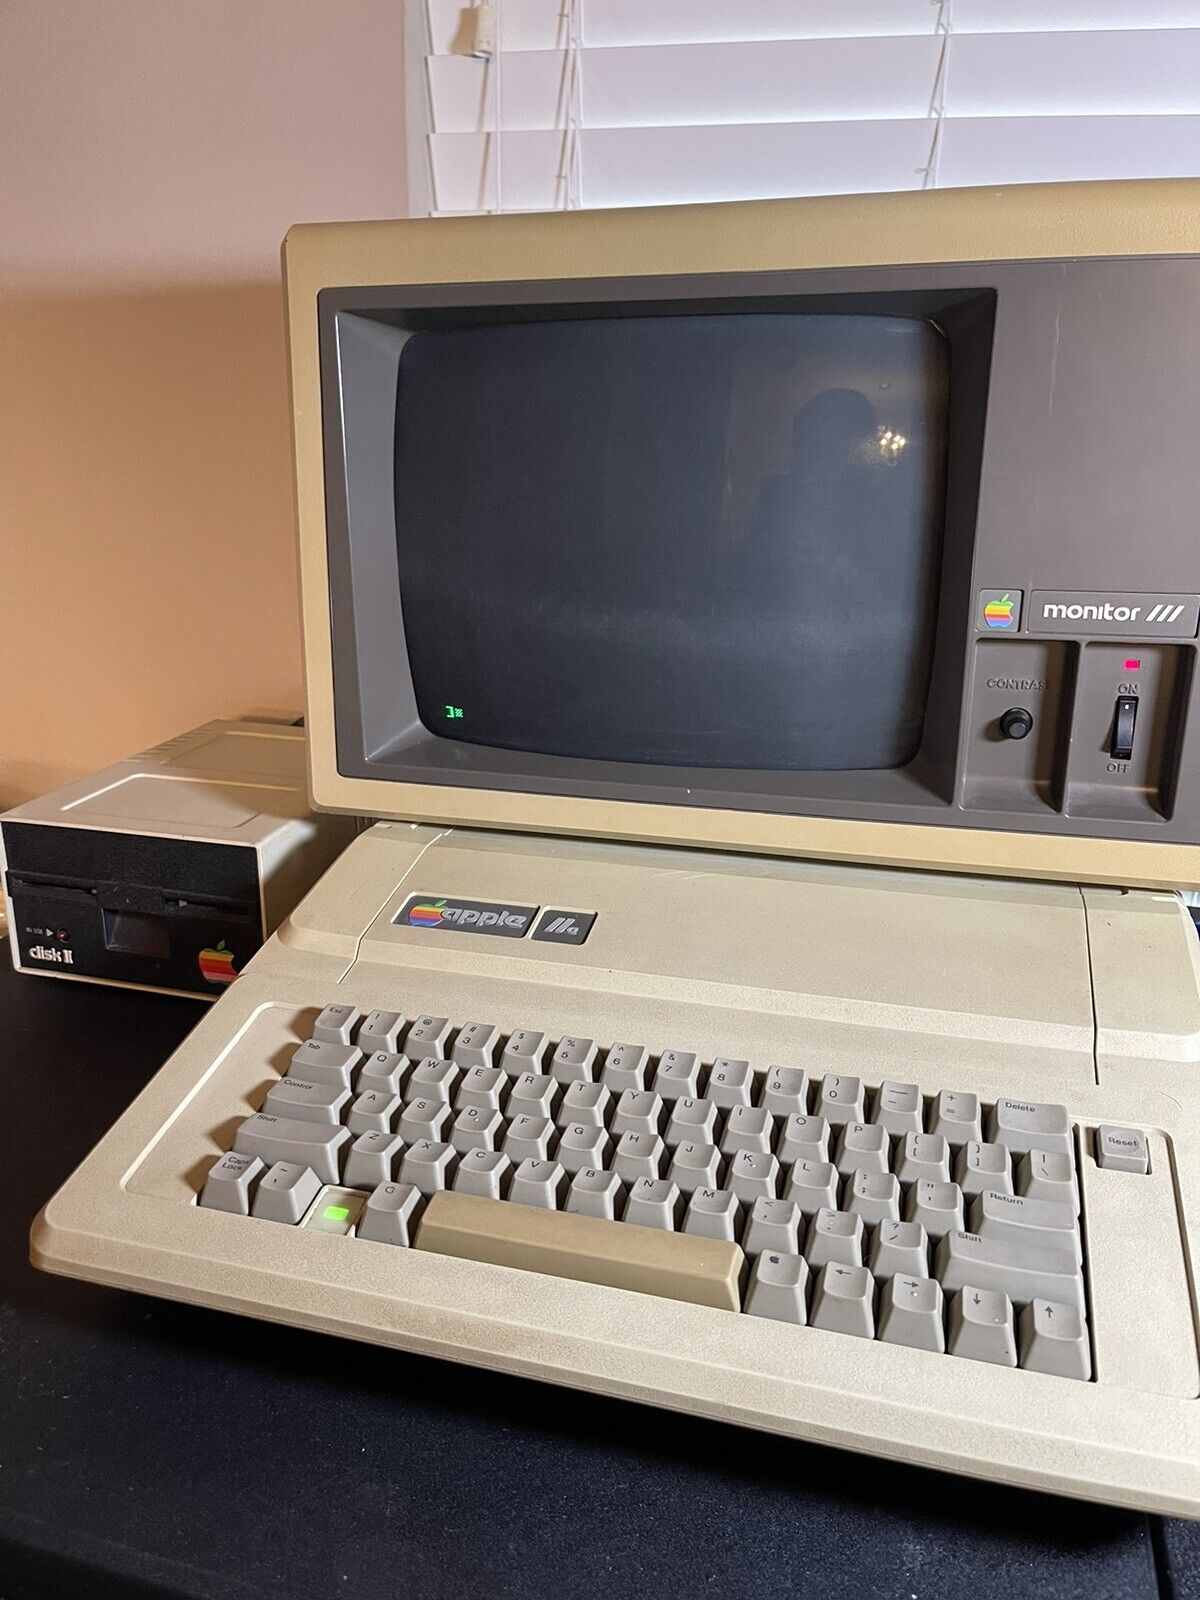 Apple IIe Computer w Monitor III A3M0039, 1 Disk Drive - New RIFA Cap, Cleaned